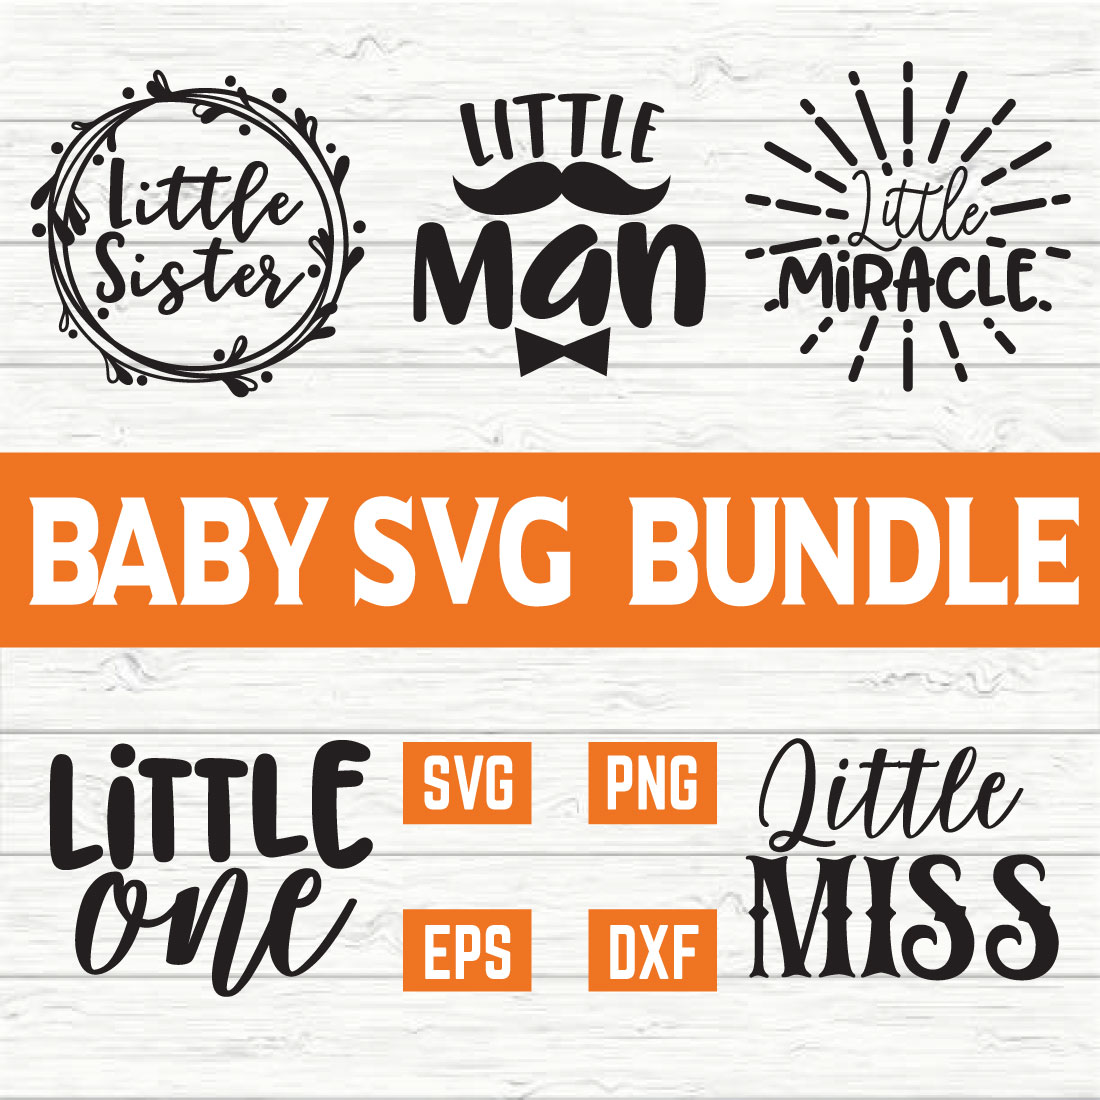 Baby Typography Design Bundle vol 6 cover image.